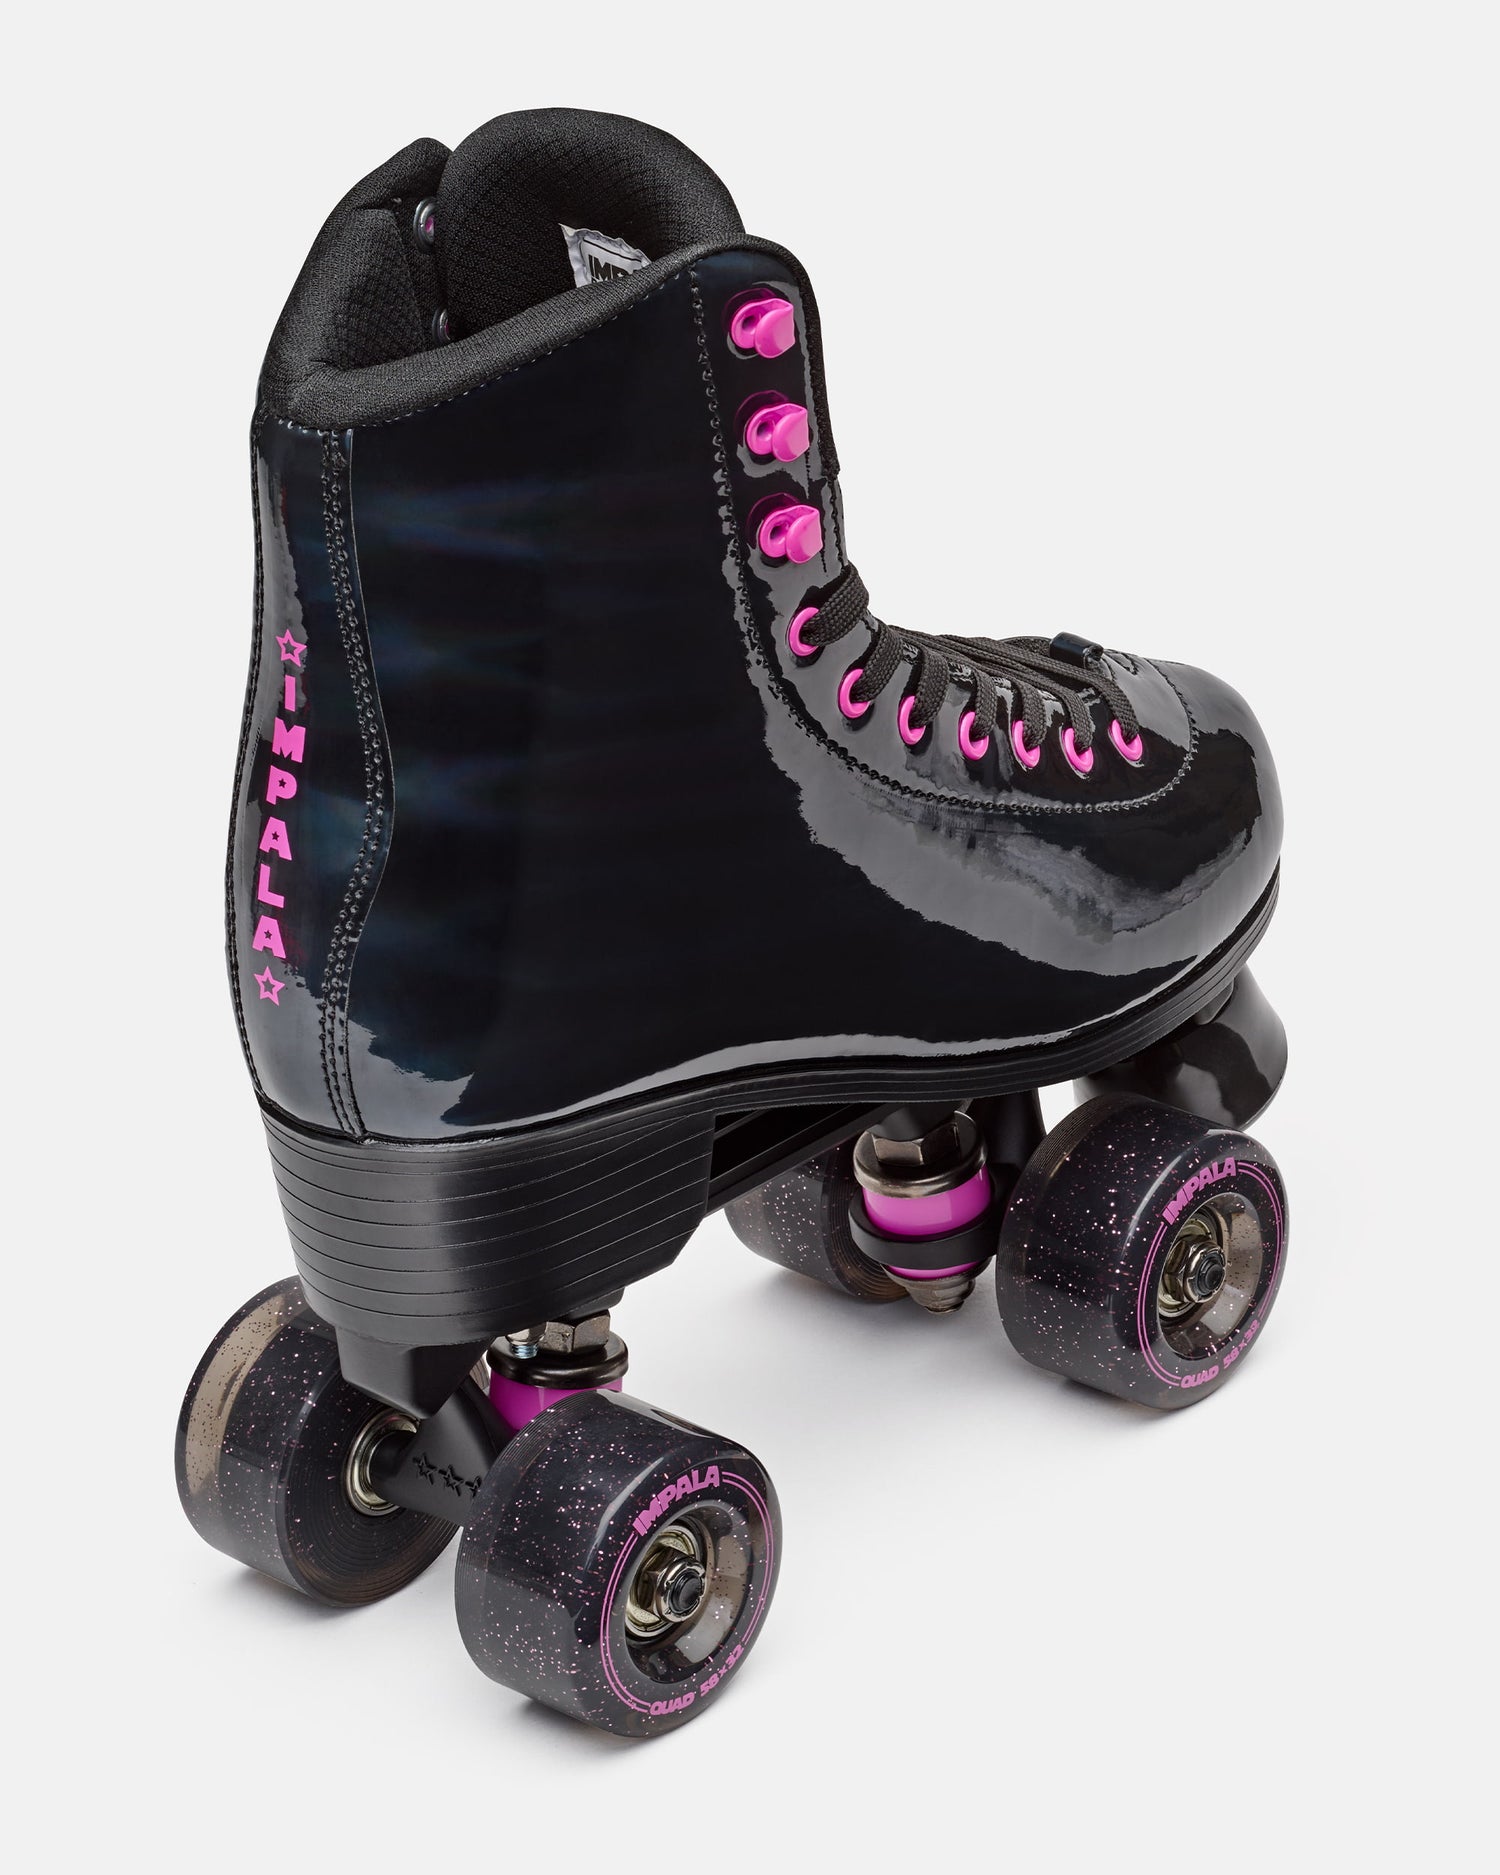 Impala Roller Skates - Black Holographic